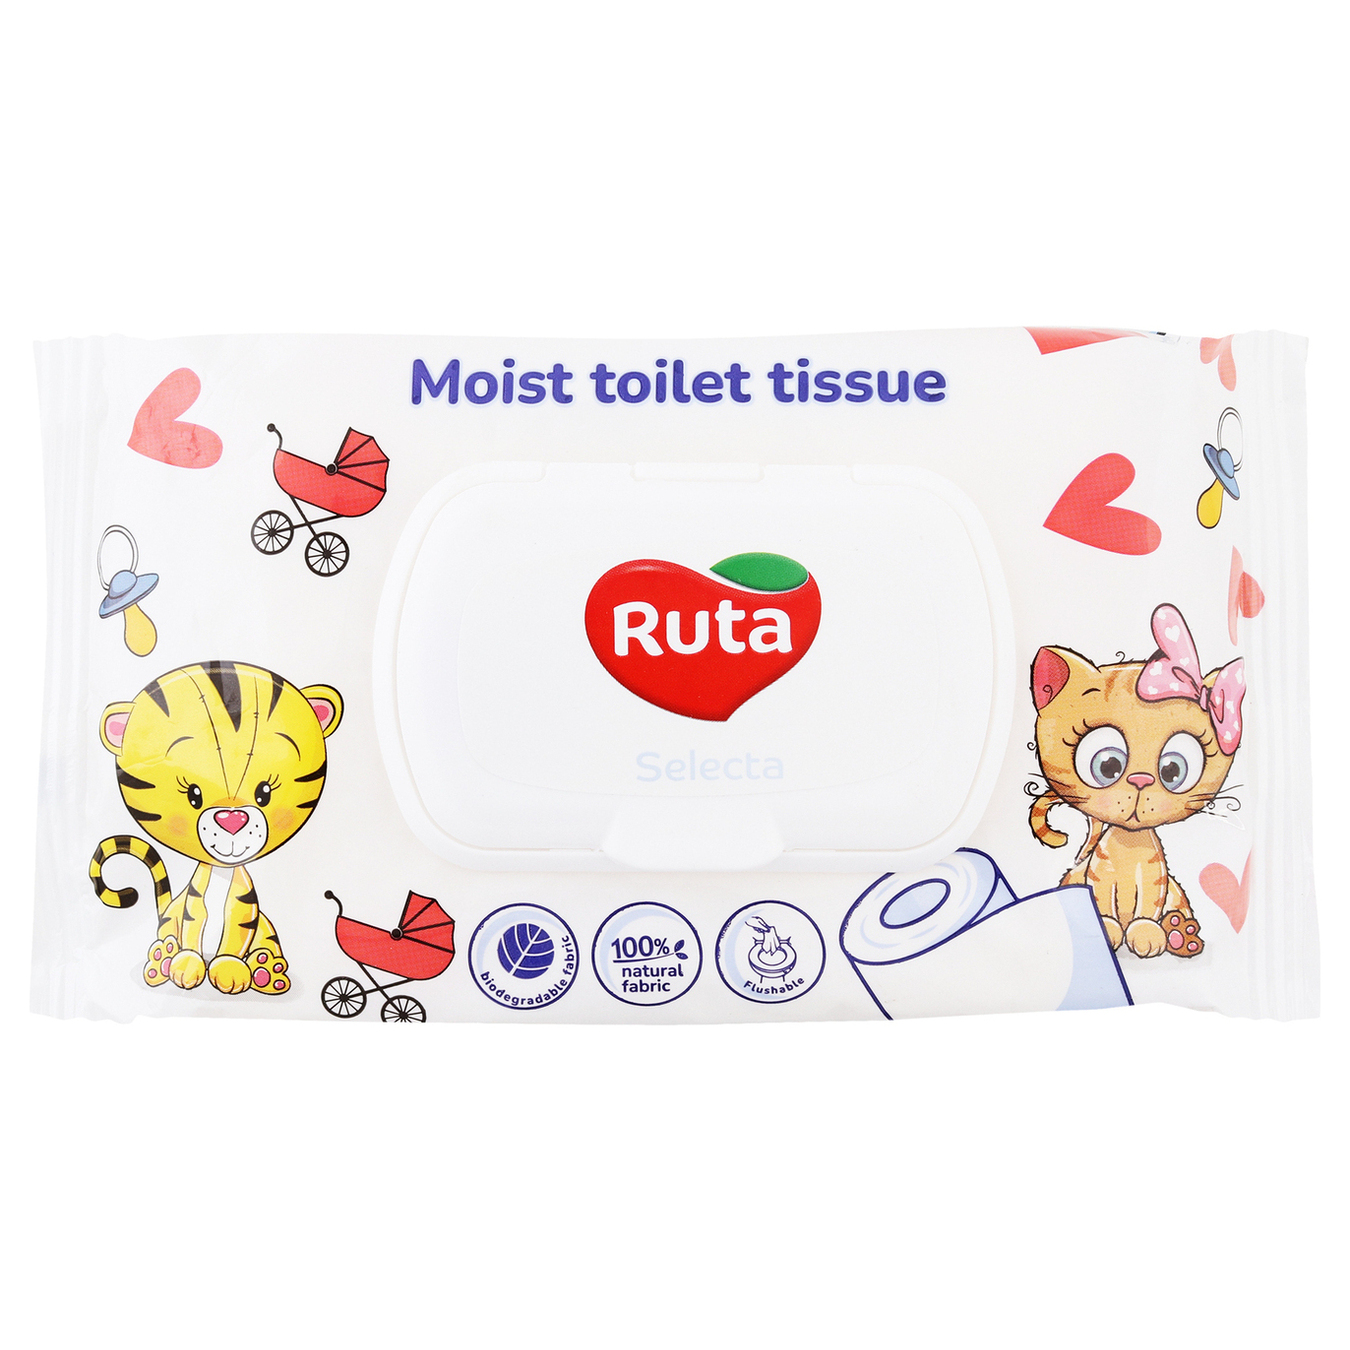 Ruta Selecta wet toilet paper 40pcs/pack